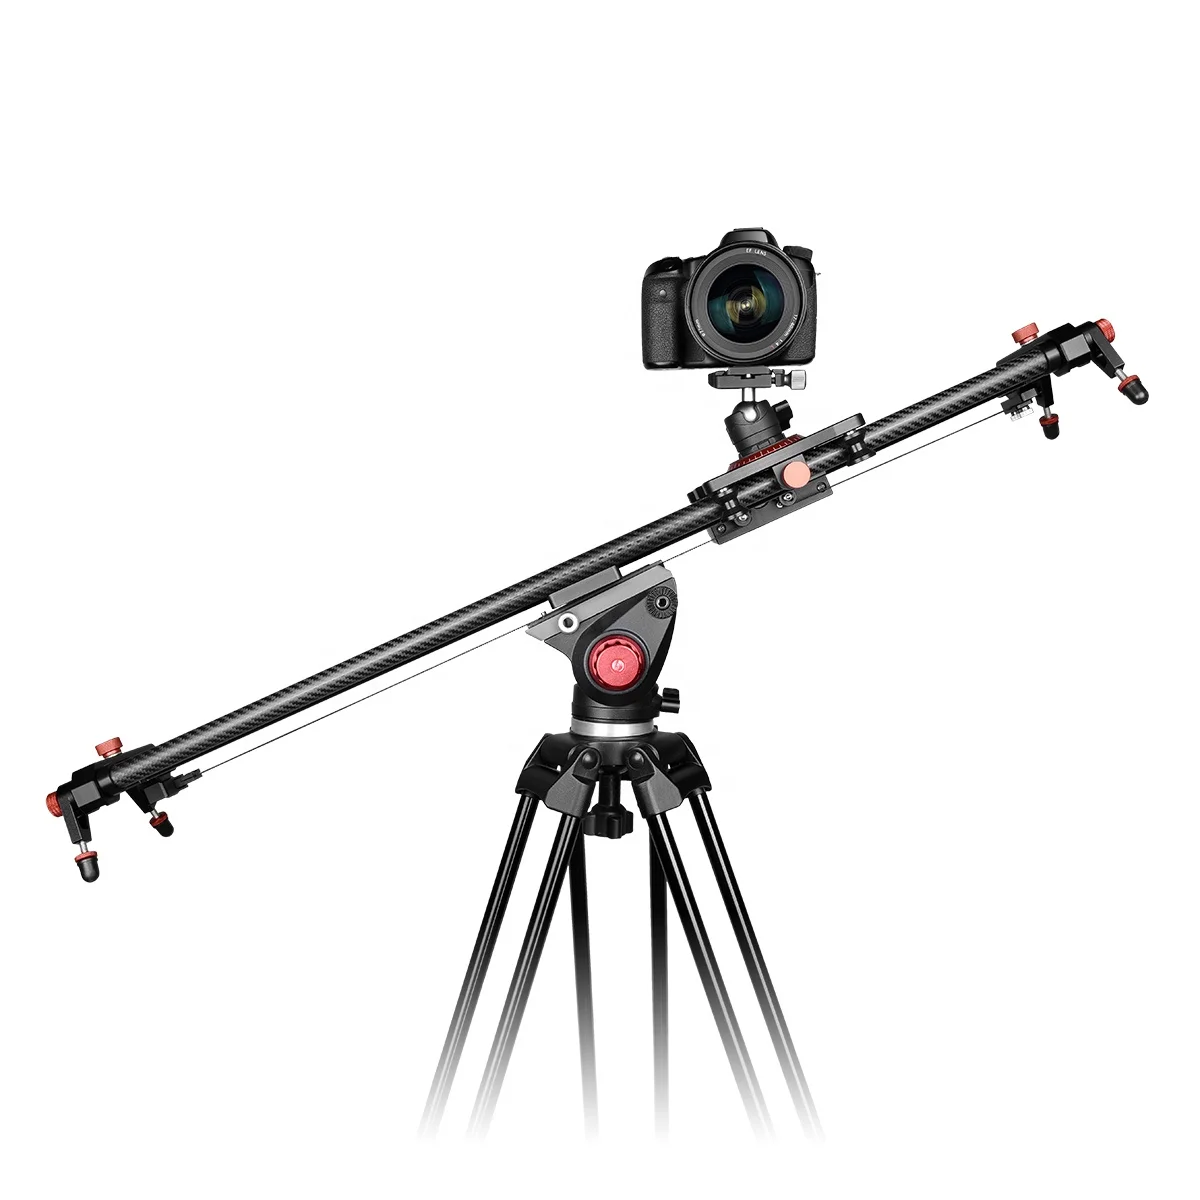 L80RC Motozied Camera Slider 2.4G Wireless Control Carbon Fiber Track Rail for DSLR Camera Canon